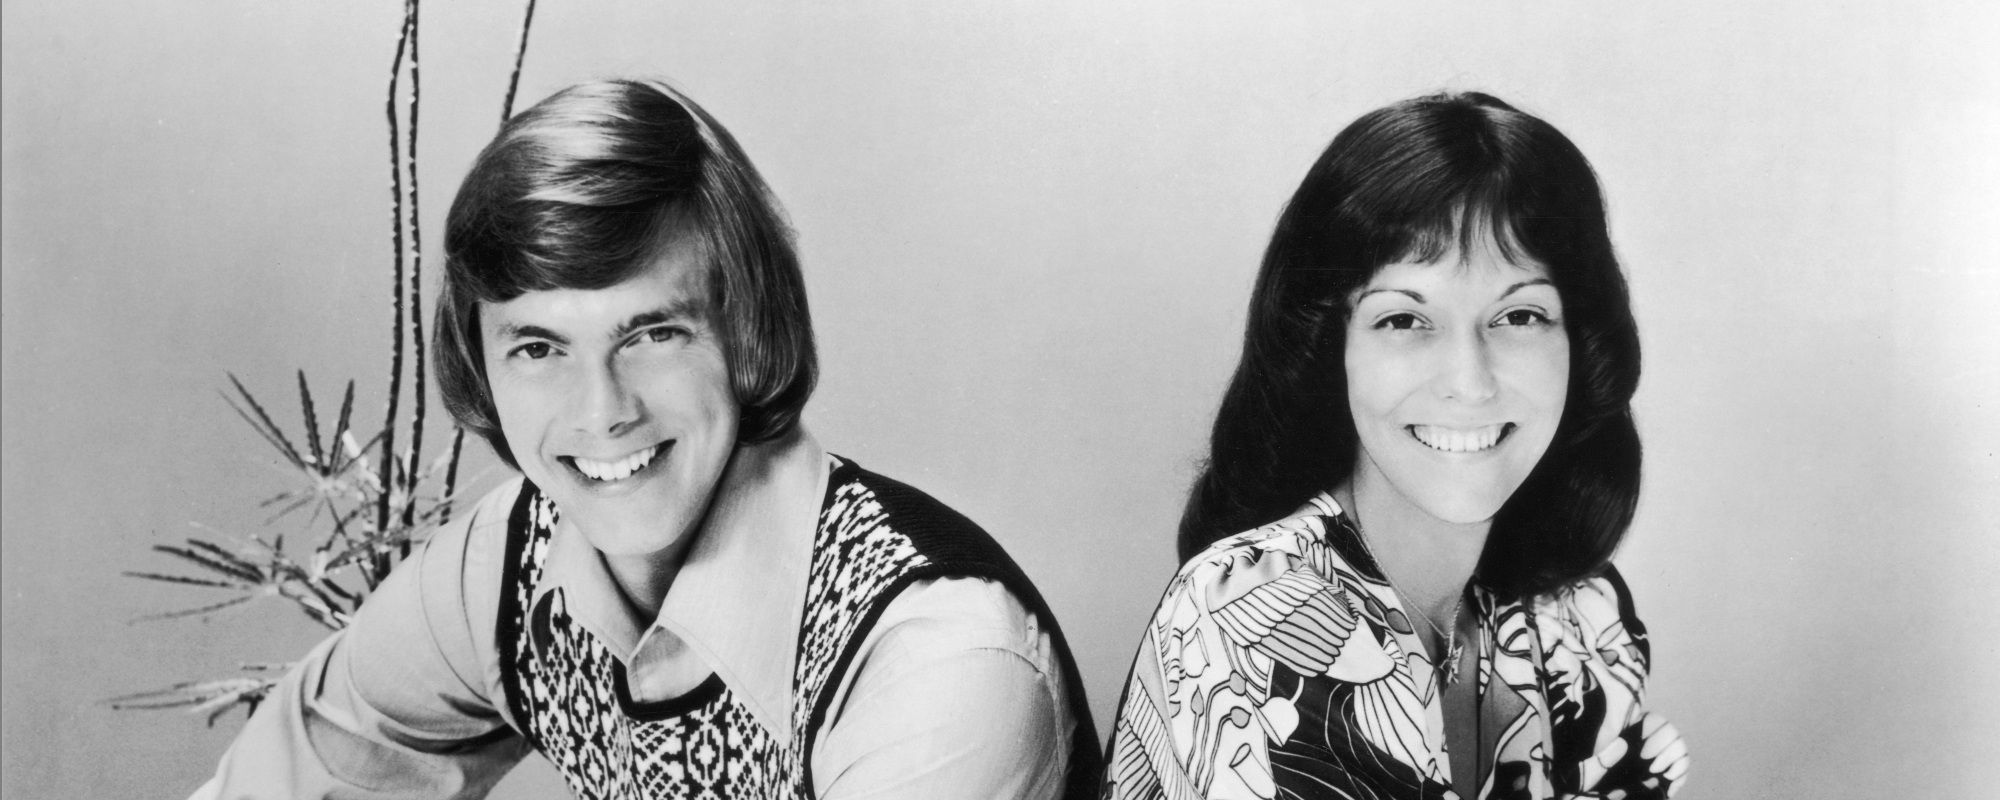 Behind the Songwriting Partnership of Siblings — Richard and Karen Carpenter (The Carpenters)